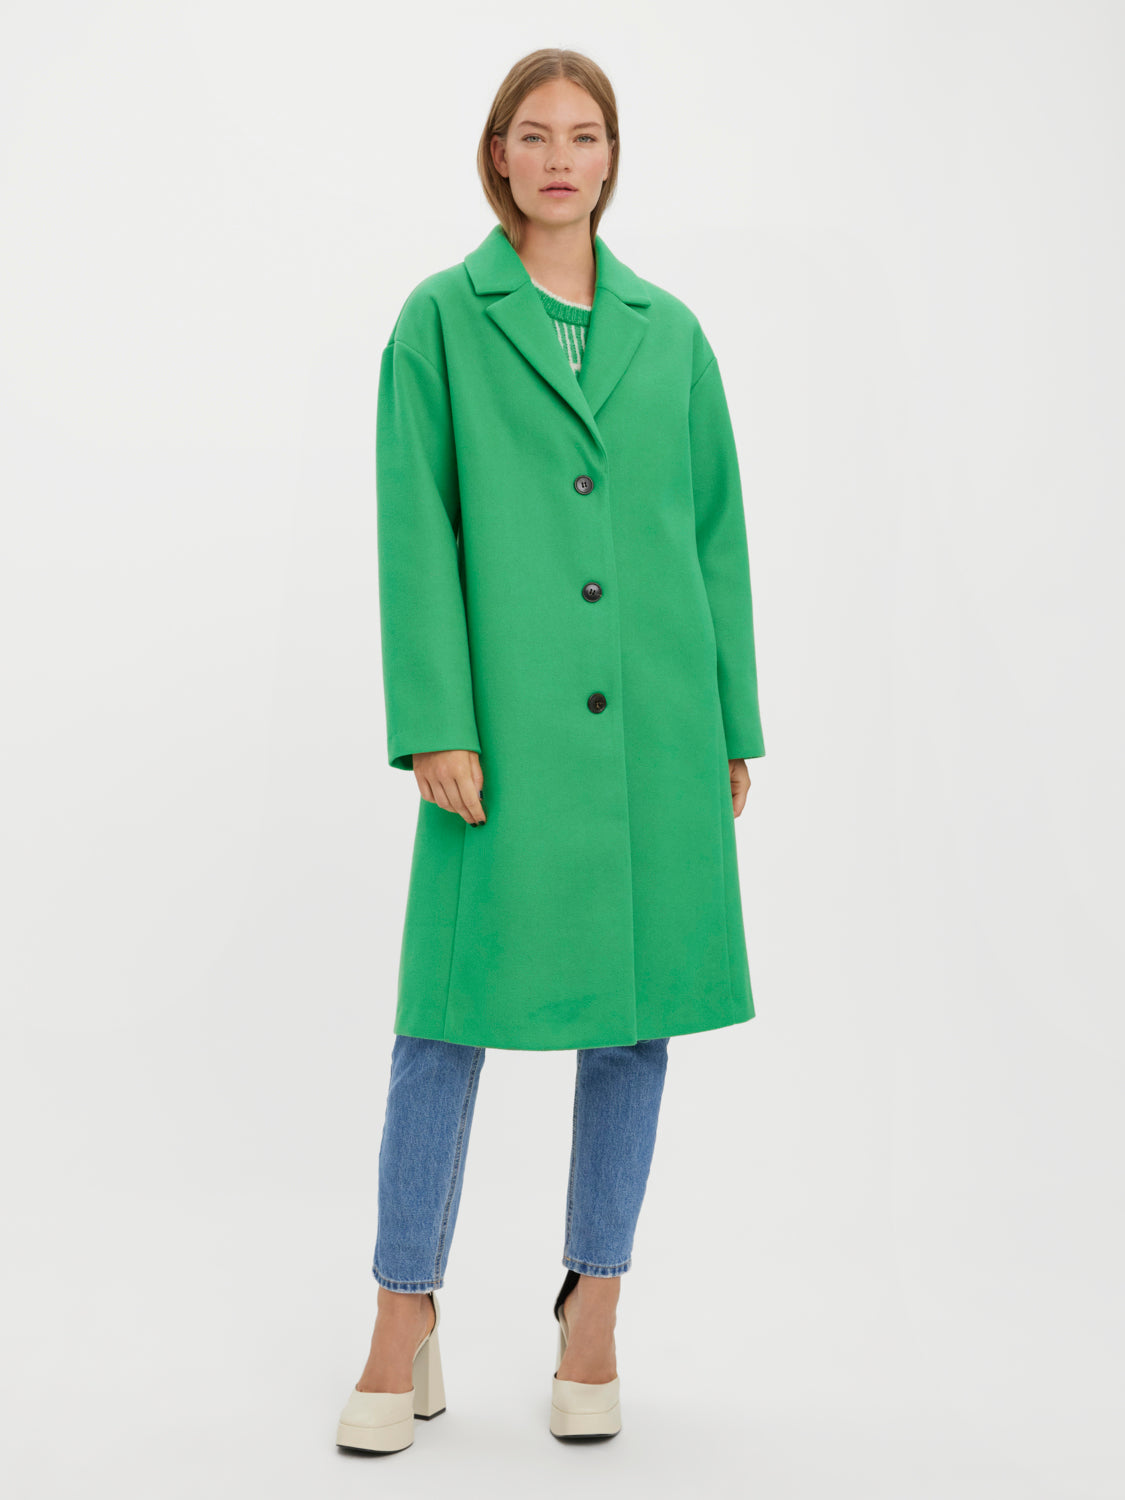 VMFORTUNELYON Coat - Bright Green